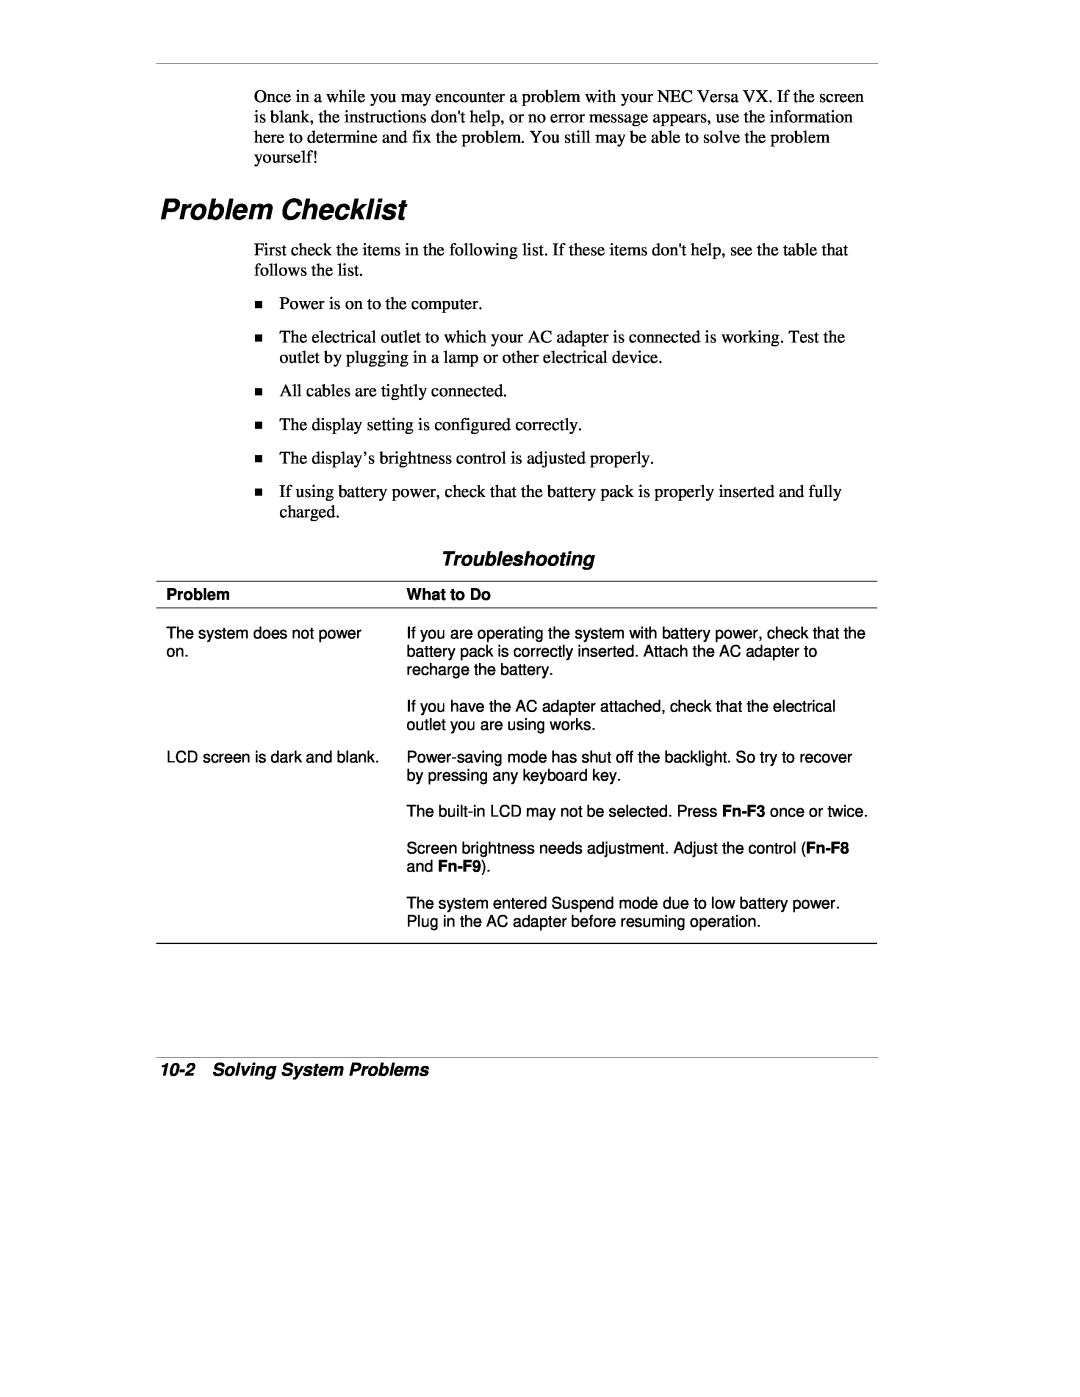 NEC VX manual Problem Checklist, Troubleshooting, Solving System Problems 